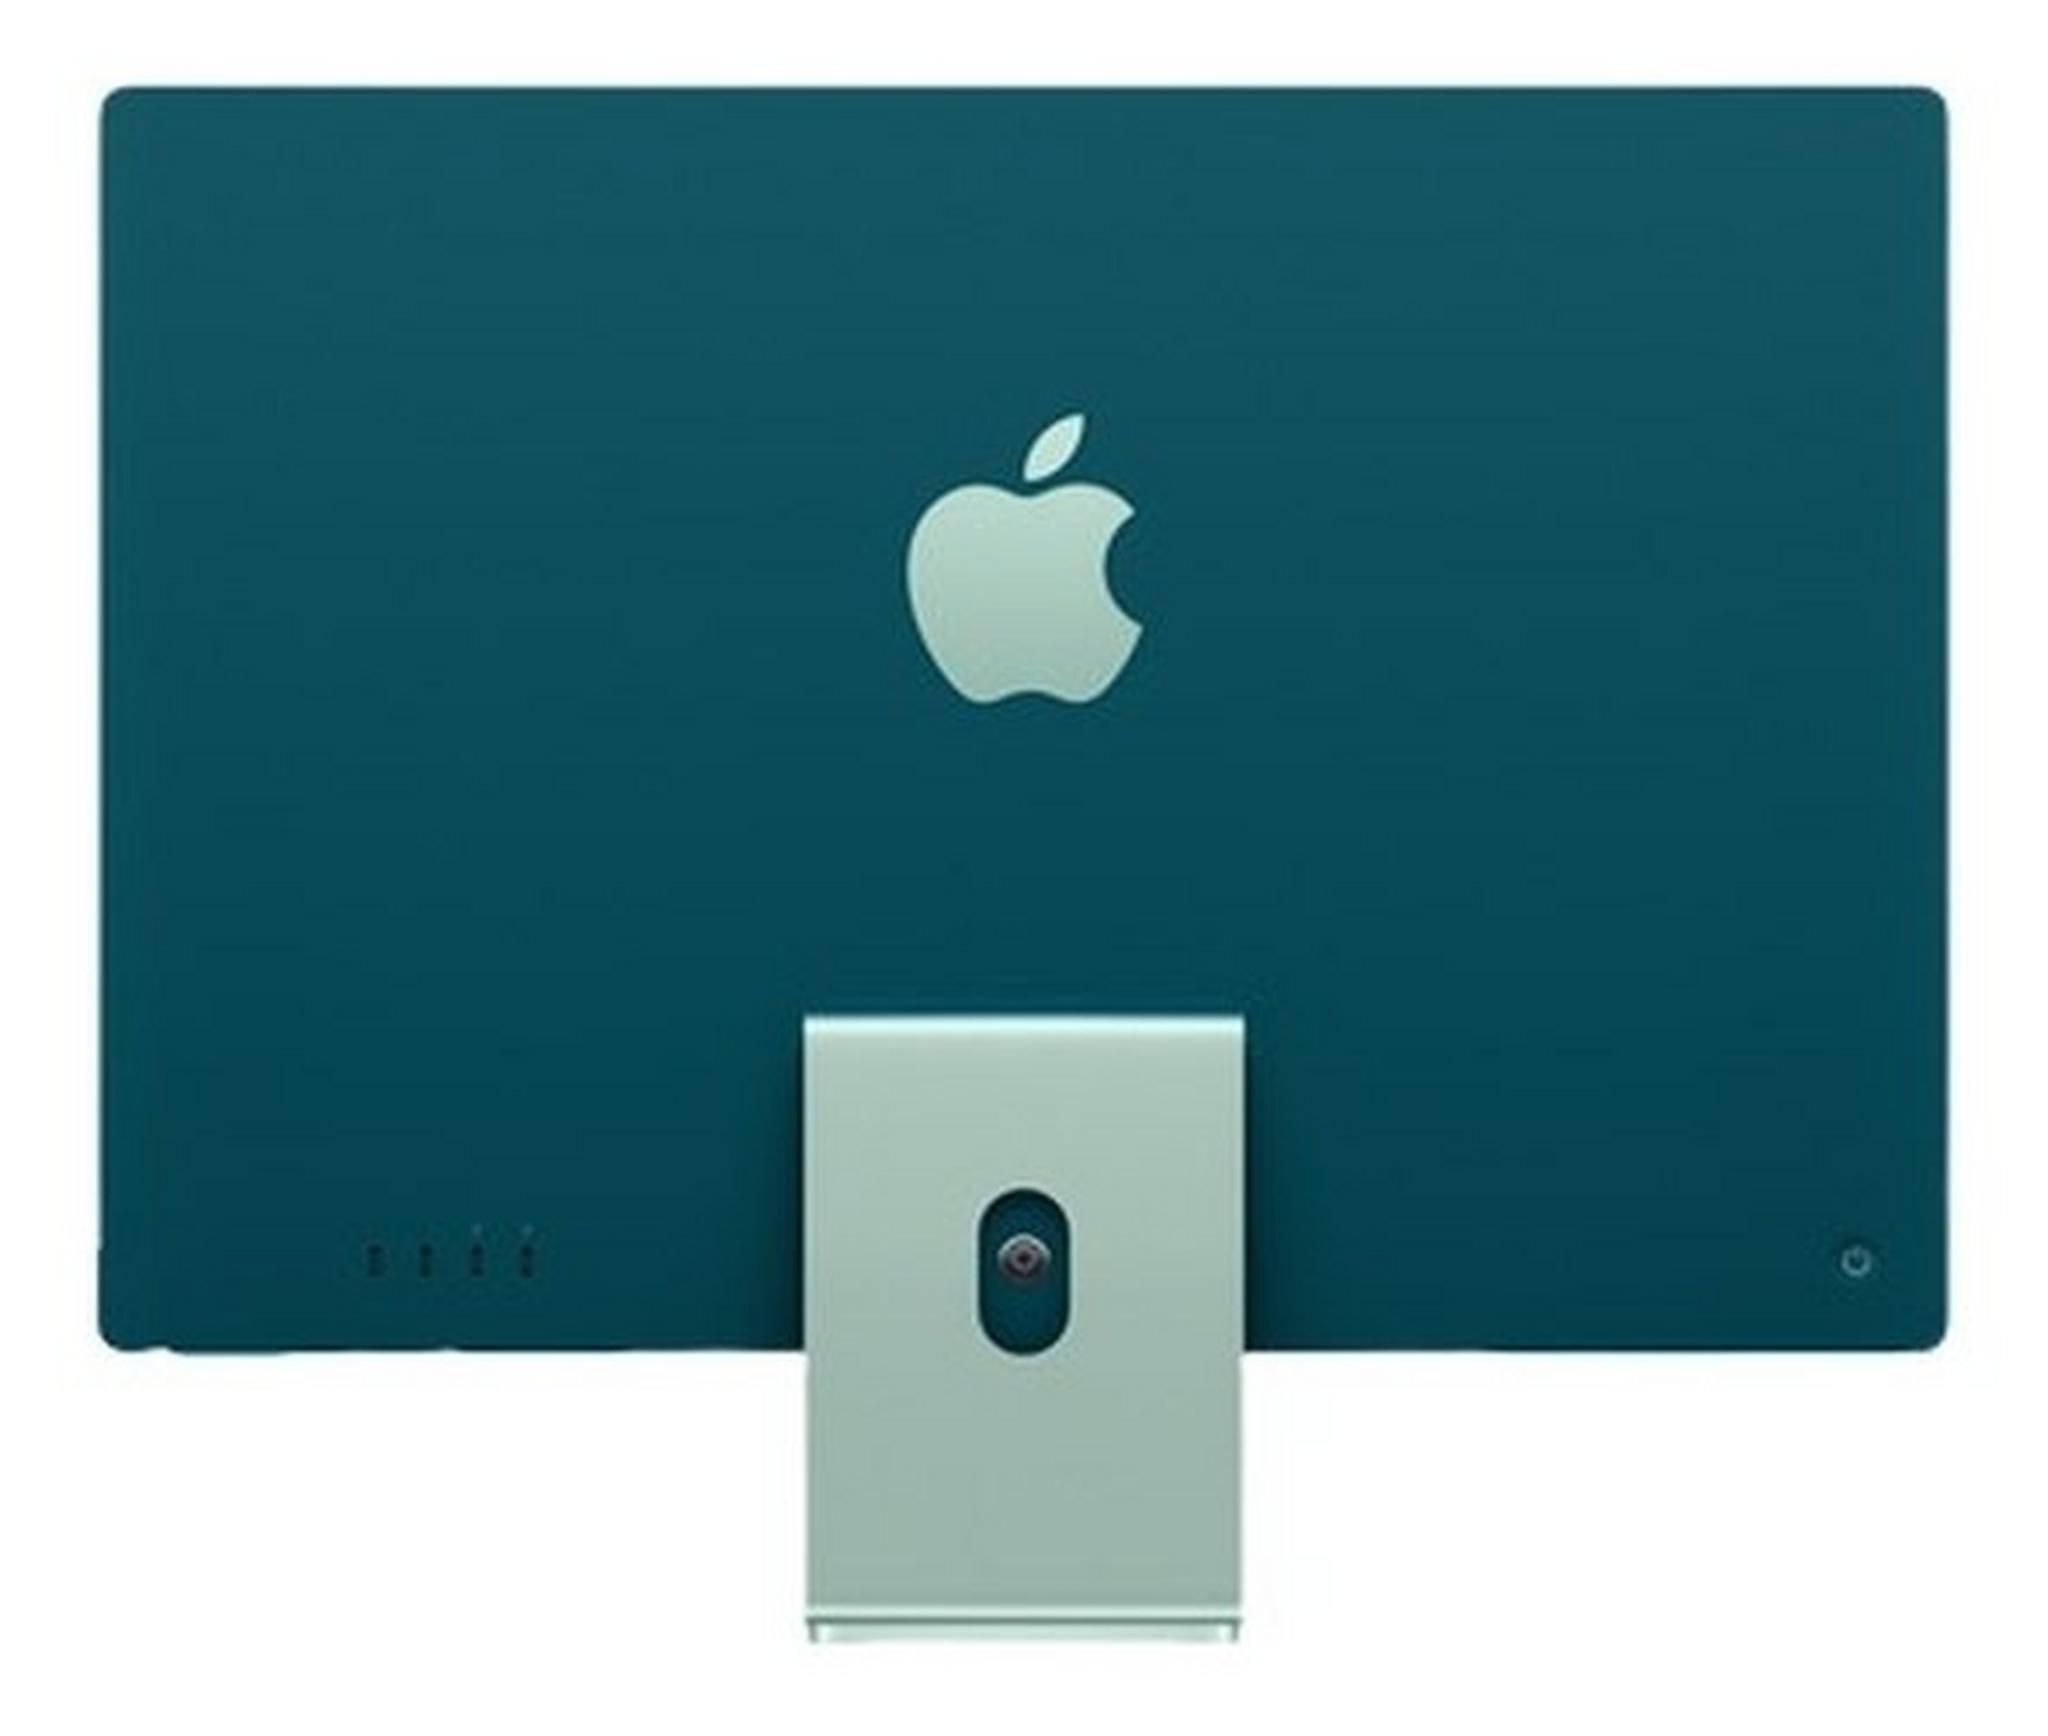 Apple iMac M1 Processor 8GB RAM 256 SSD 24-inch Touch ID 4.5K Retina Display All-In-One Desktop (2021) - Green